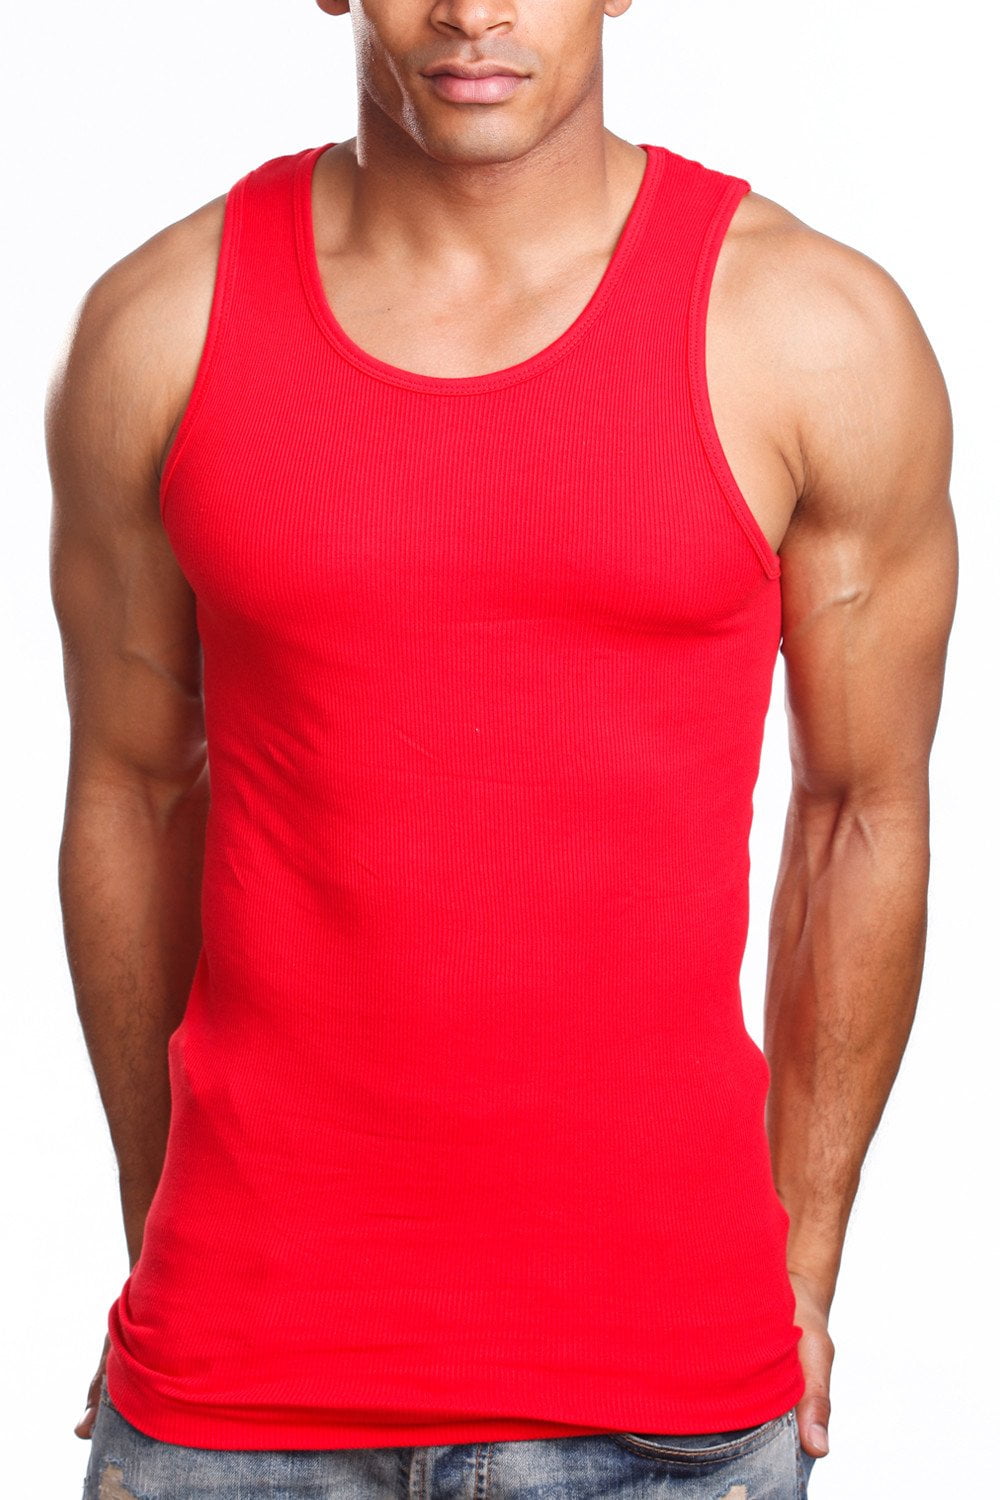 Pro Club - Pro 5 Mens A-Shirts 3 Pack Undershirt,Red,3XL - Walmart.com ...